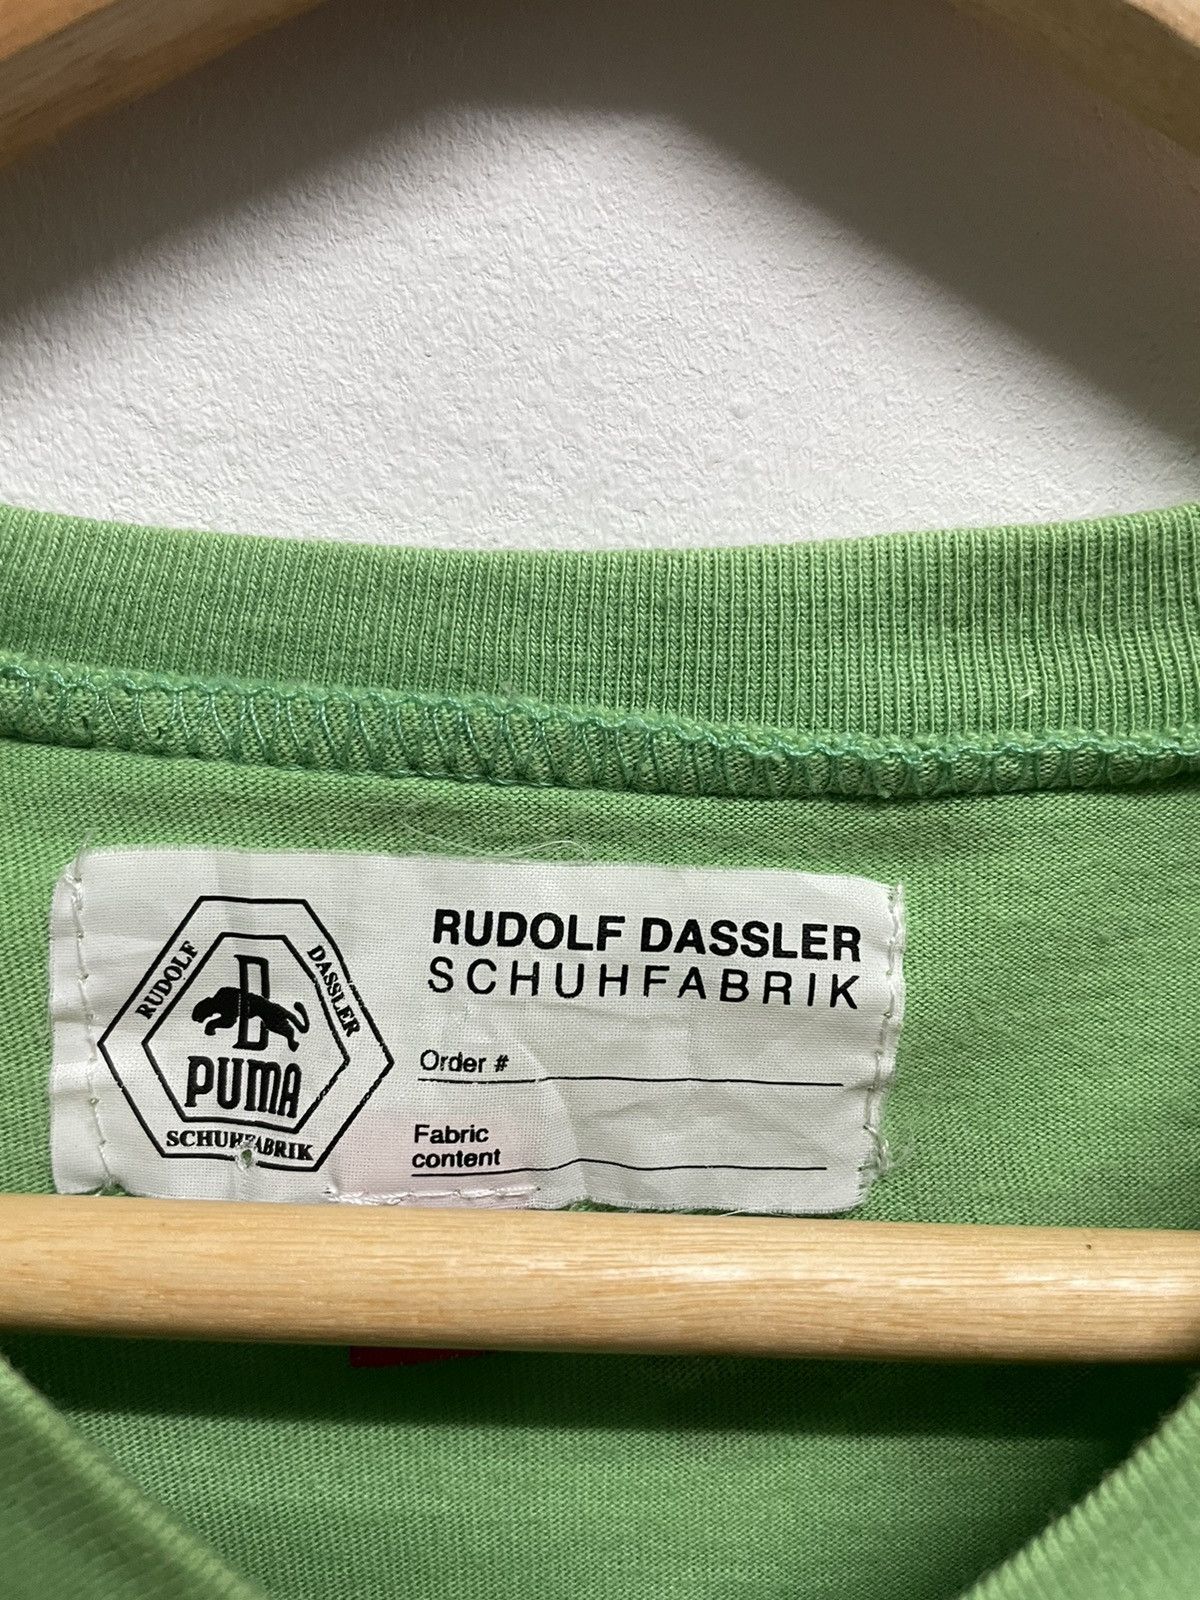 Puma Puma ❌ Rudolf Dassler T shirt Size US M / EU 48-50 / 2 - 7 Thumbnail